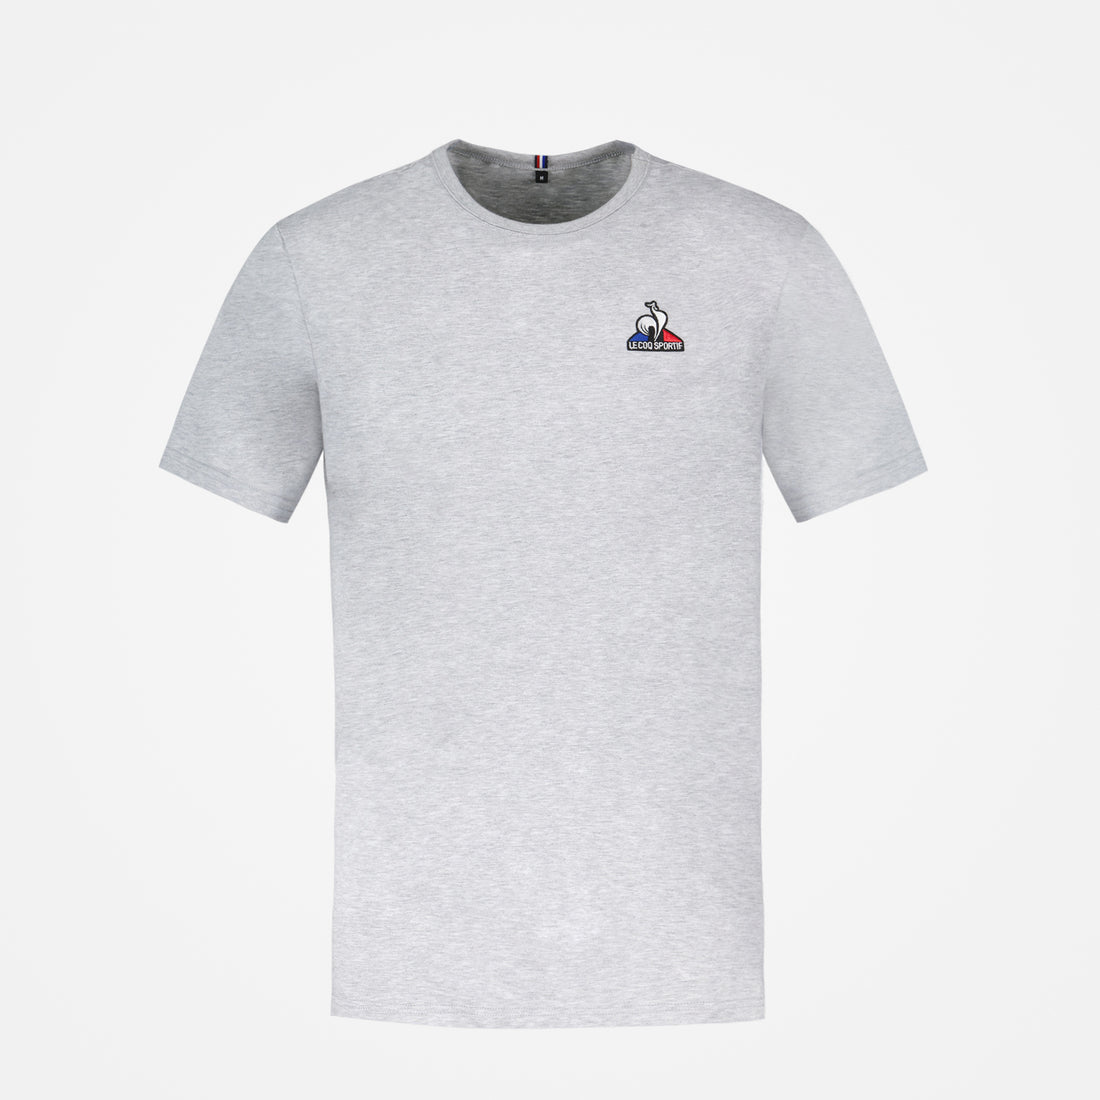 2310547-ESS Tee SS N°4 M gris chiné clair  | Camiseta Hombre